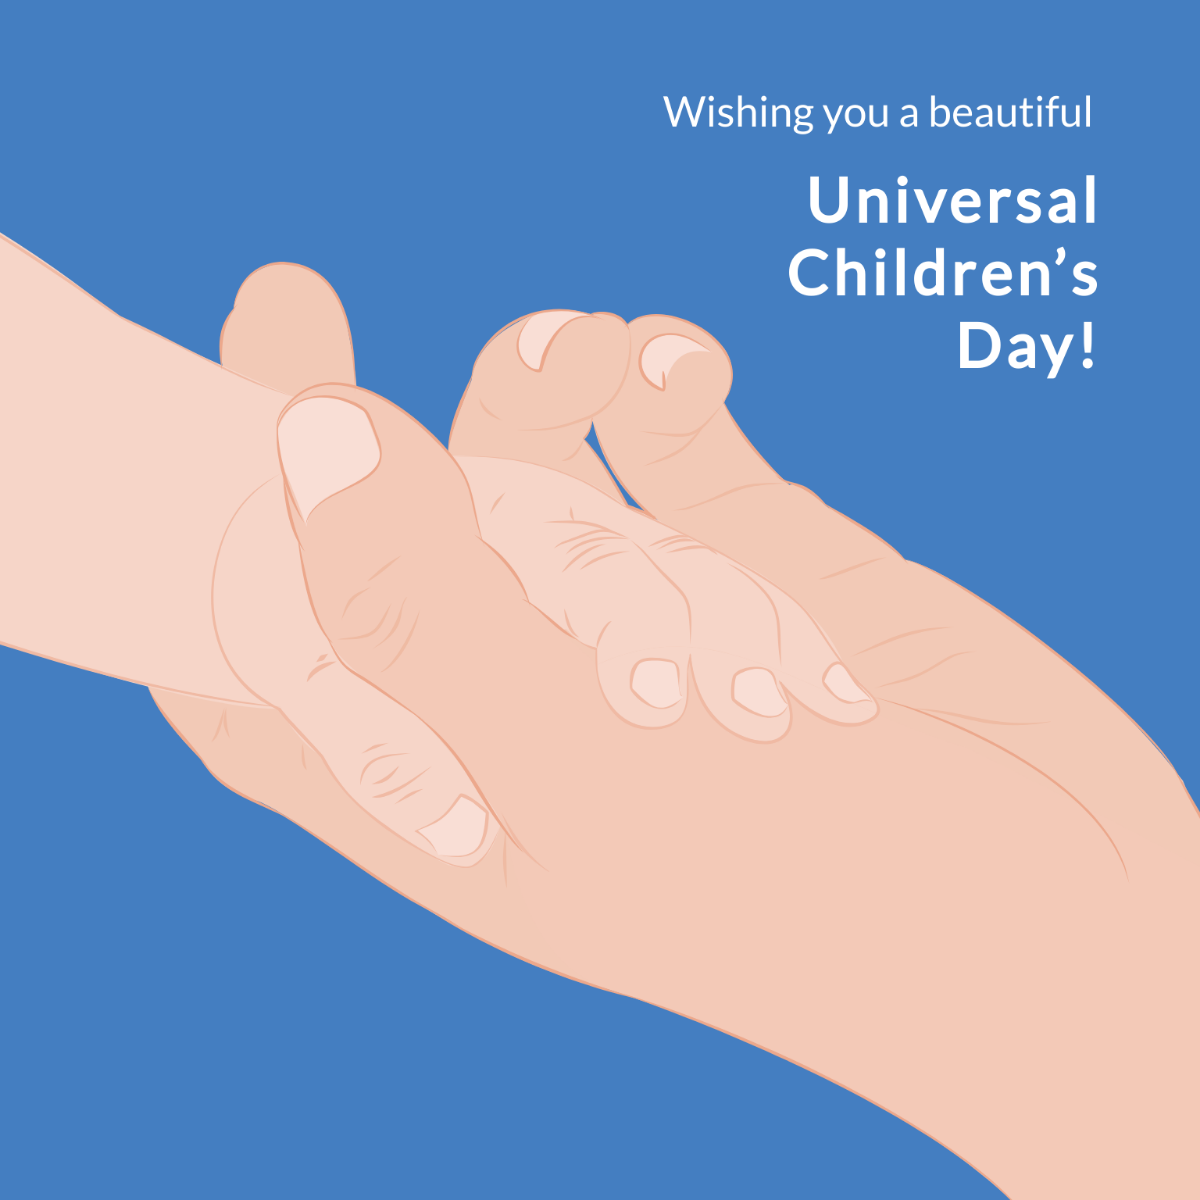 Universal Children’s Day Wishes Vector